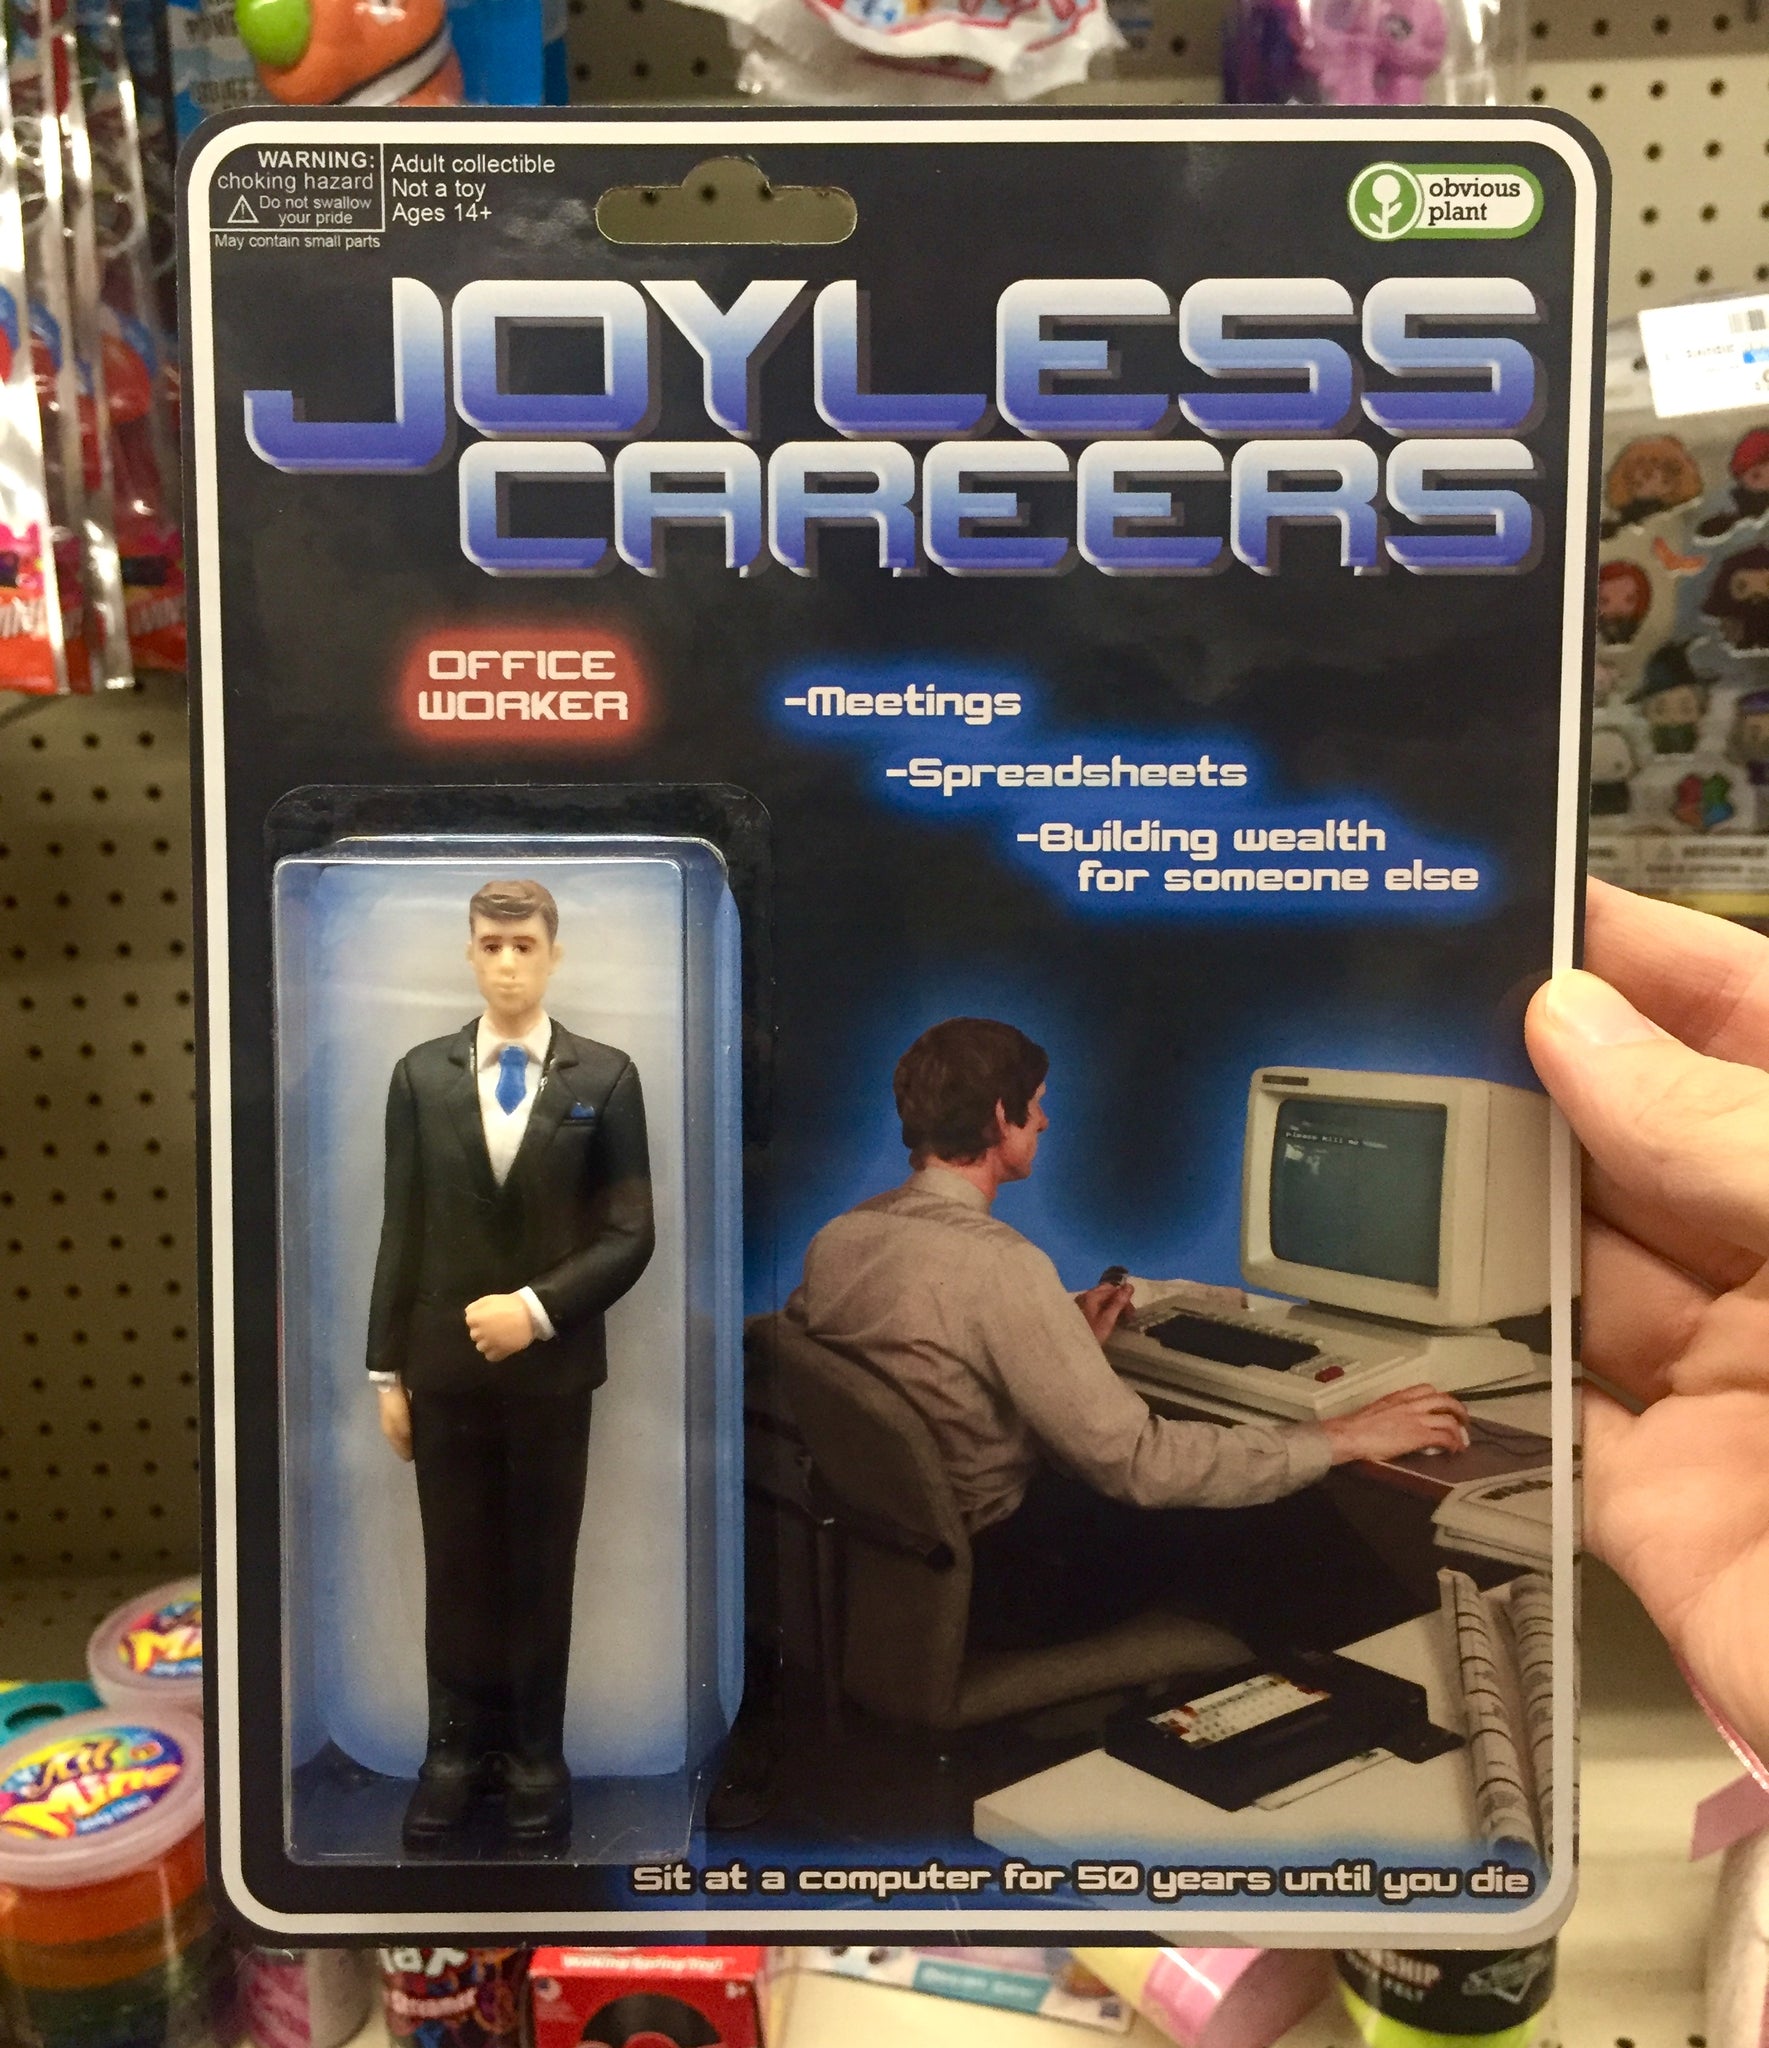 Joyless Careers - Office Worker Figure